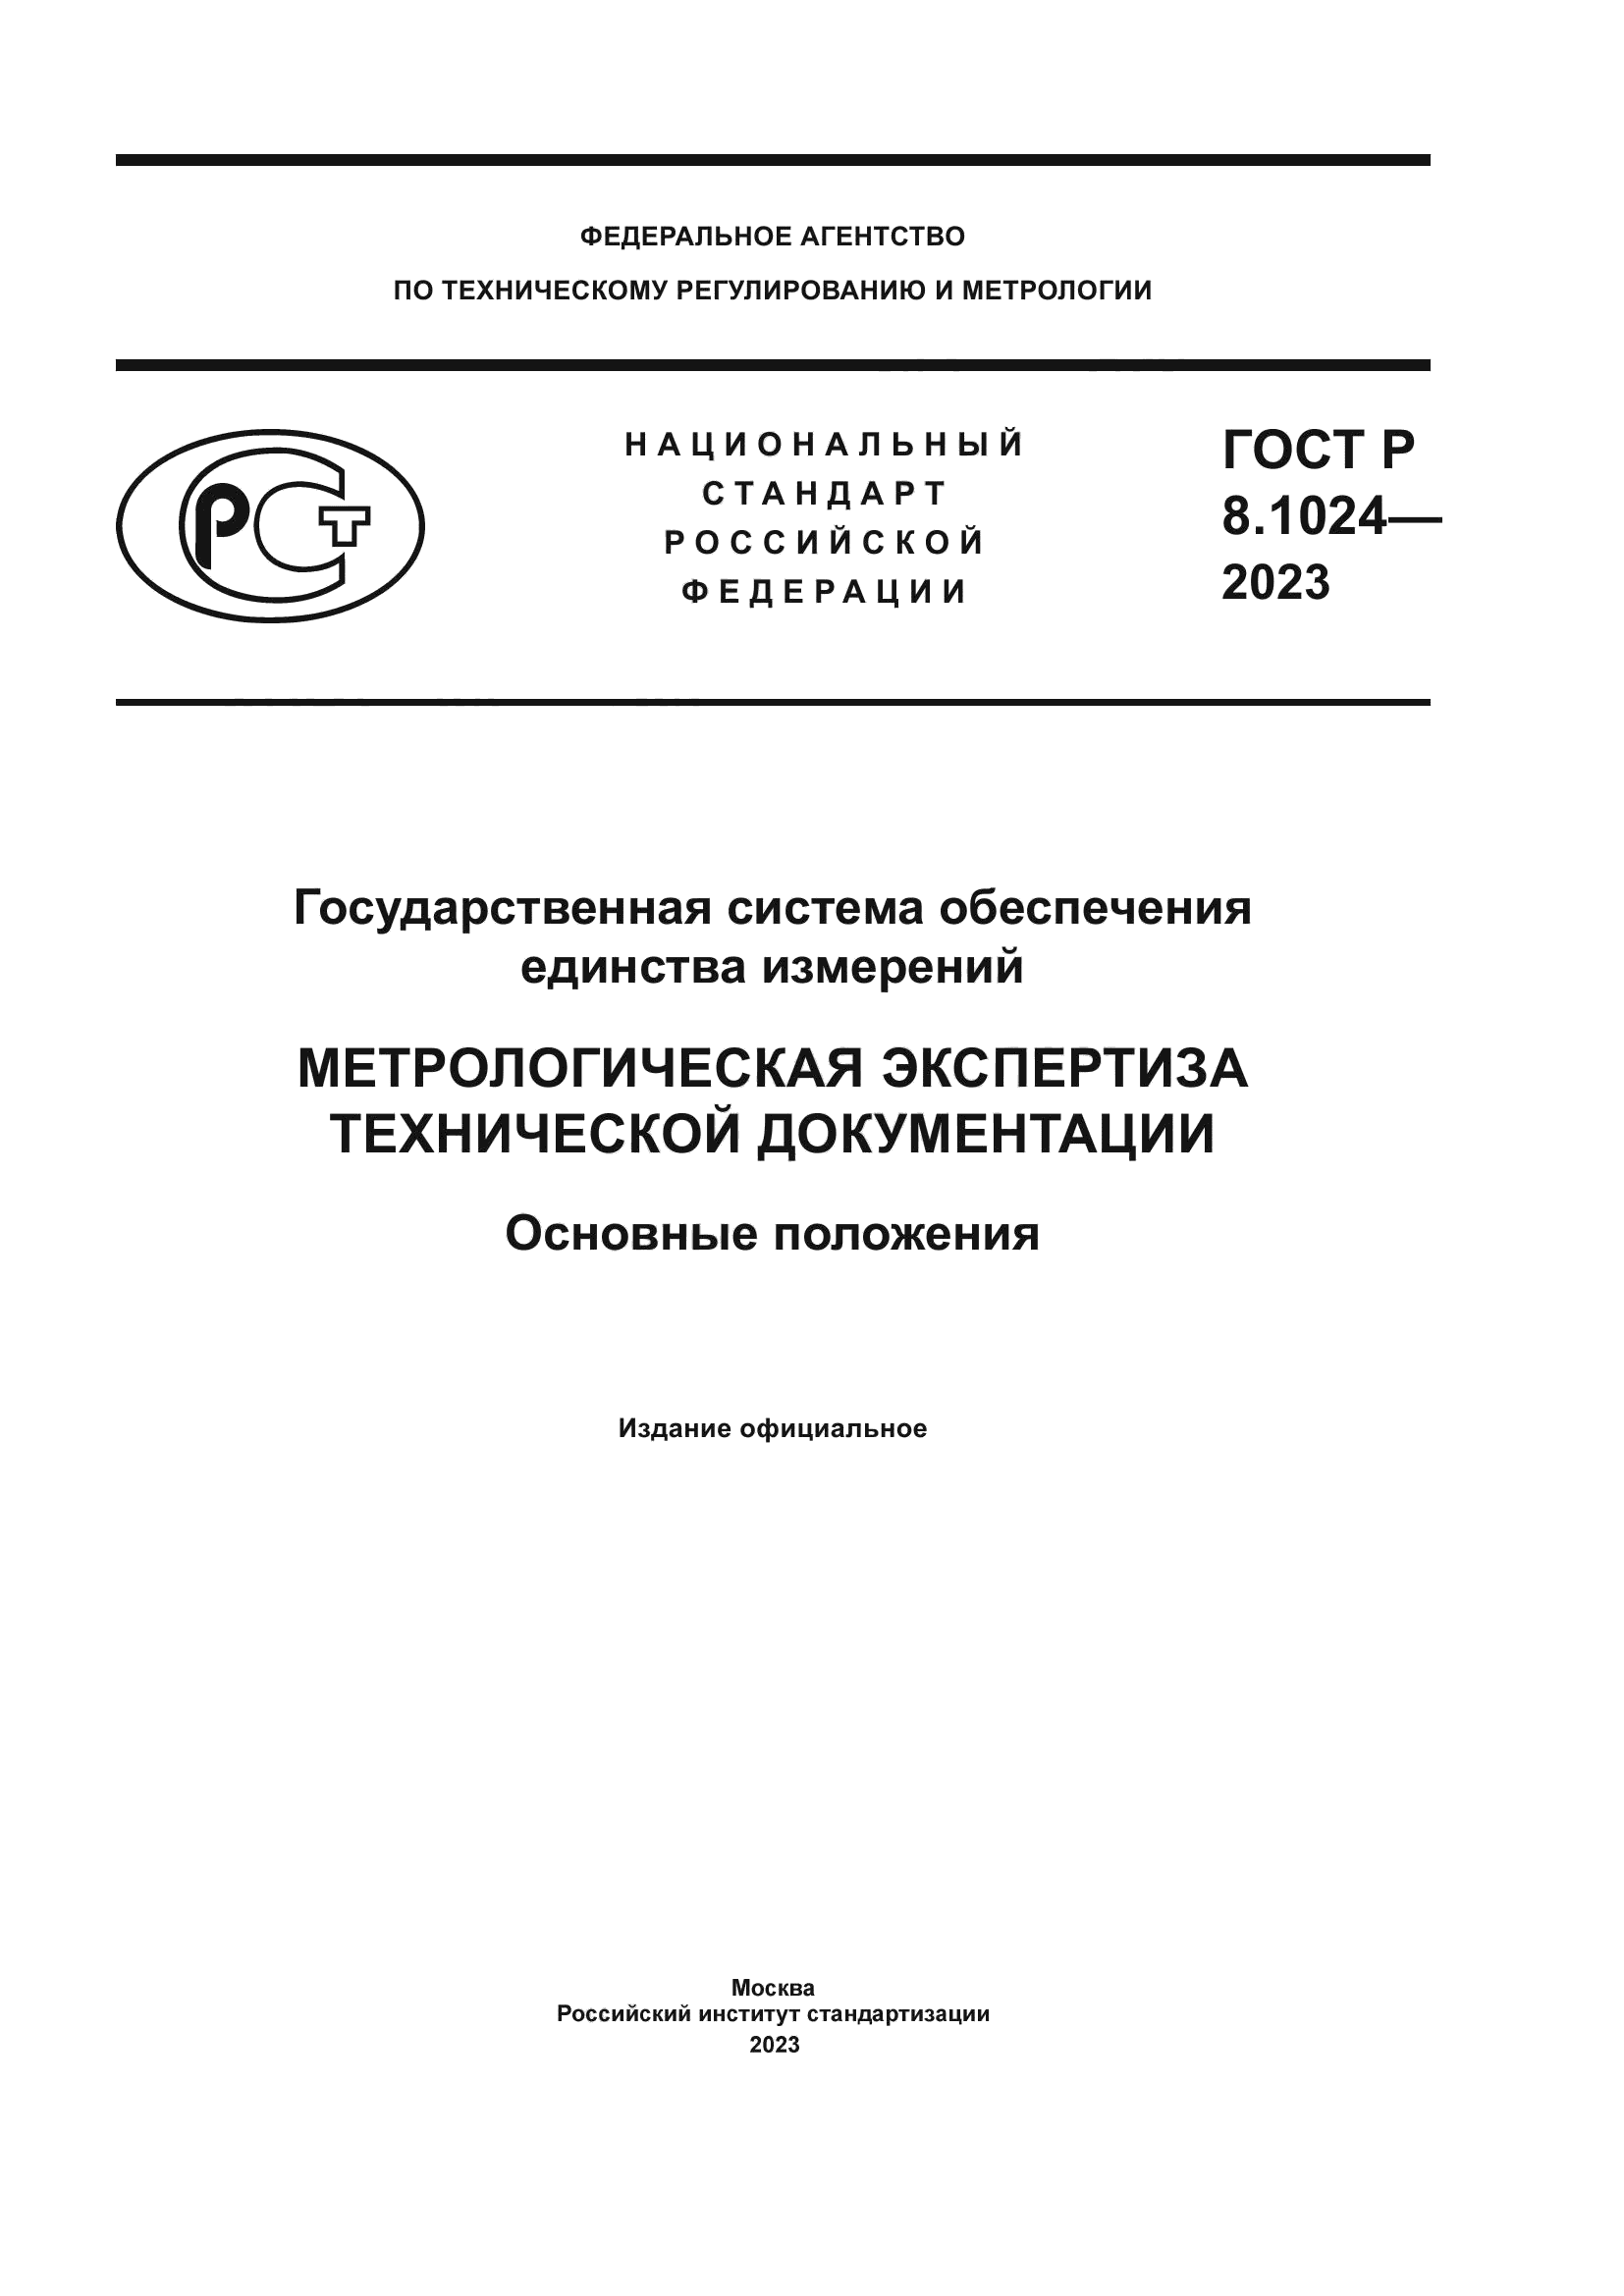 ГОСТ Р 8.1024-2023